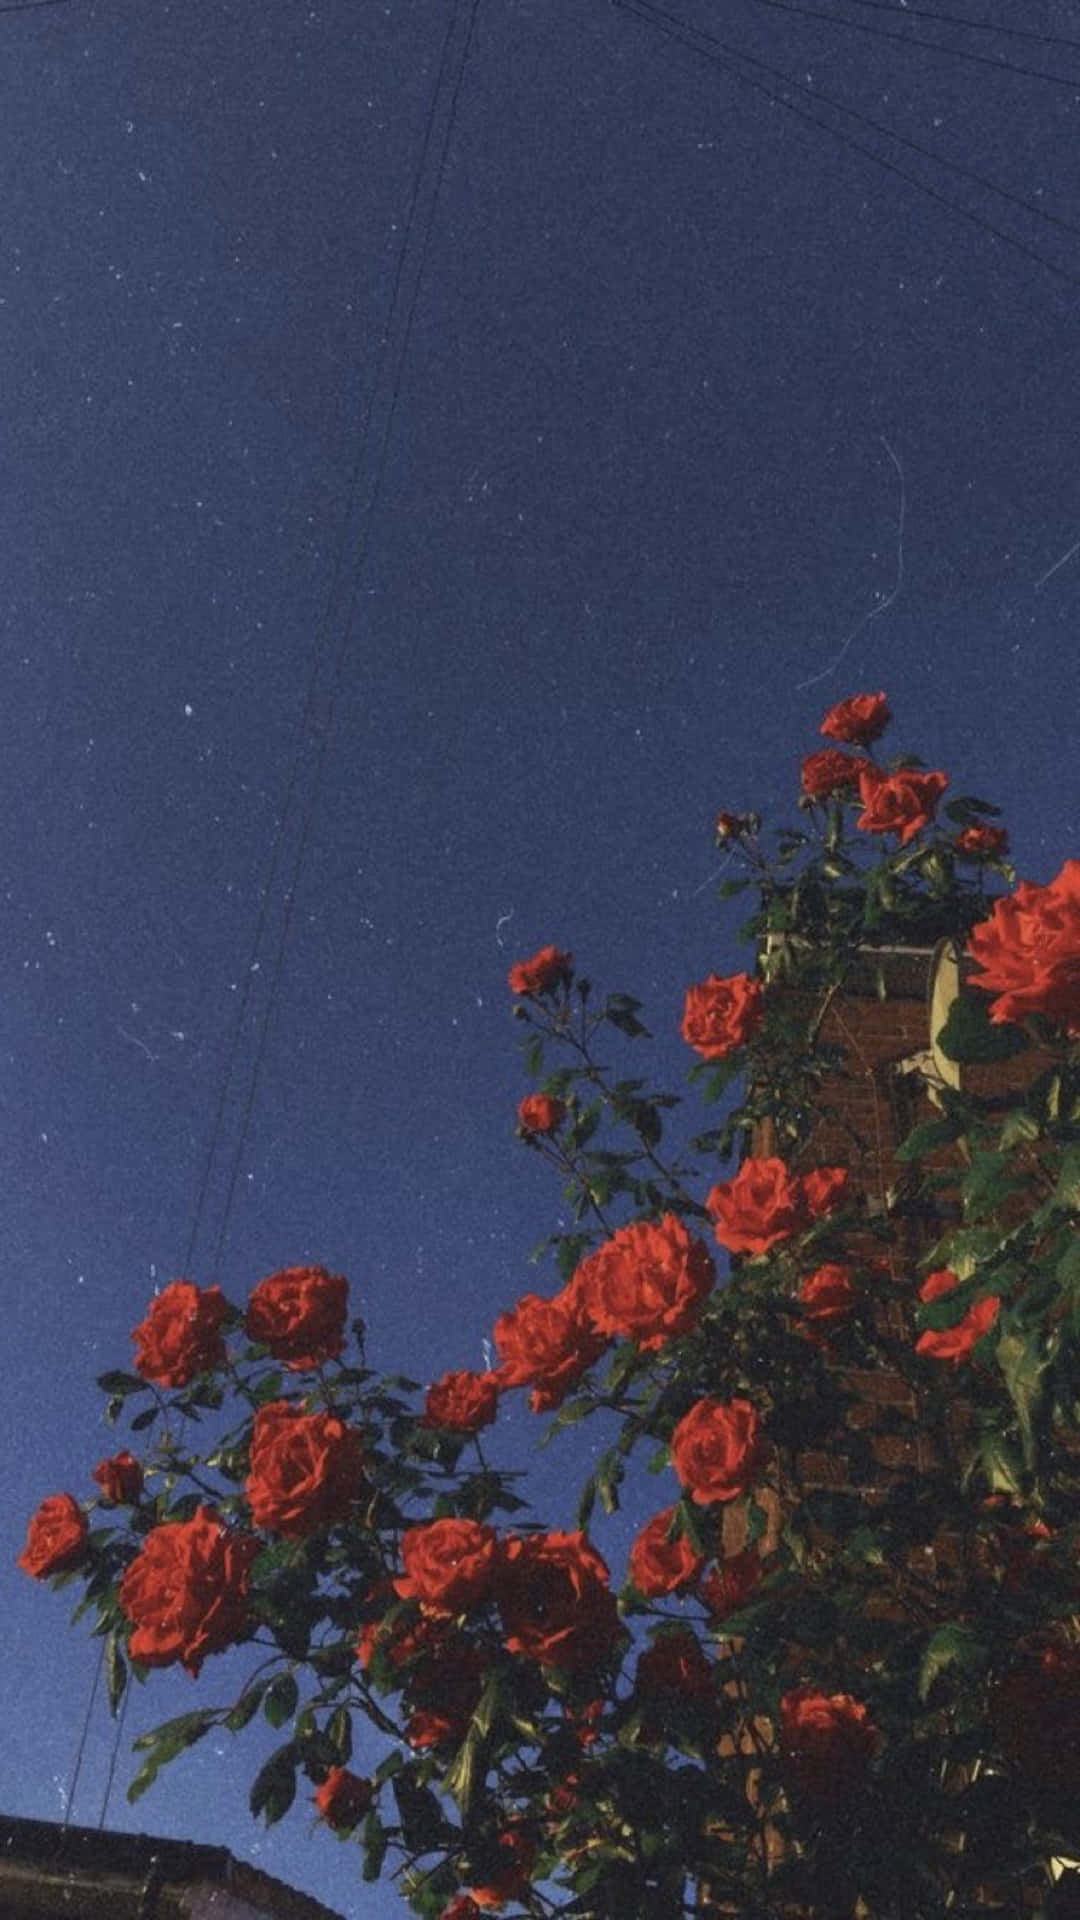 Skies And Rose Plant Phone Wallpaper